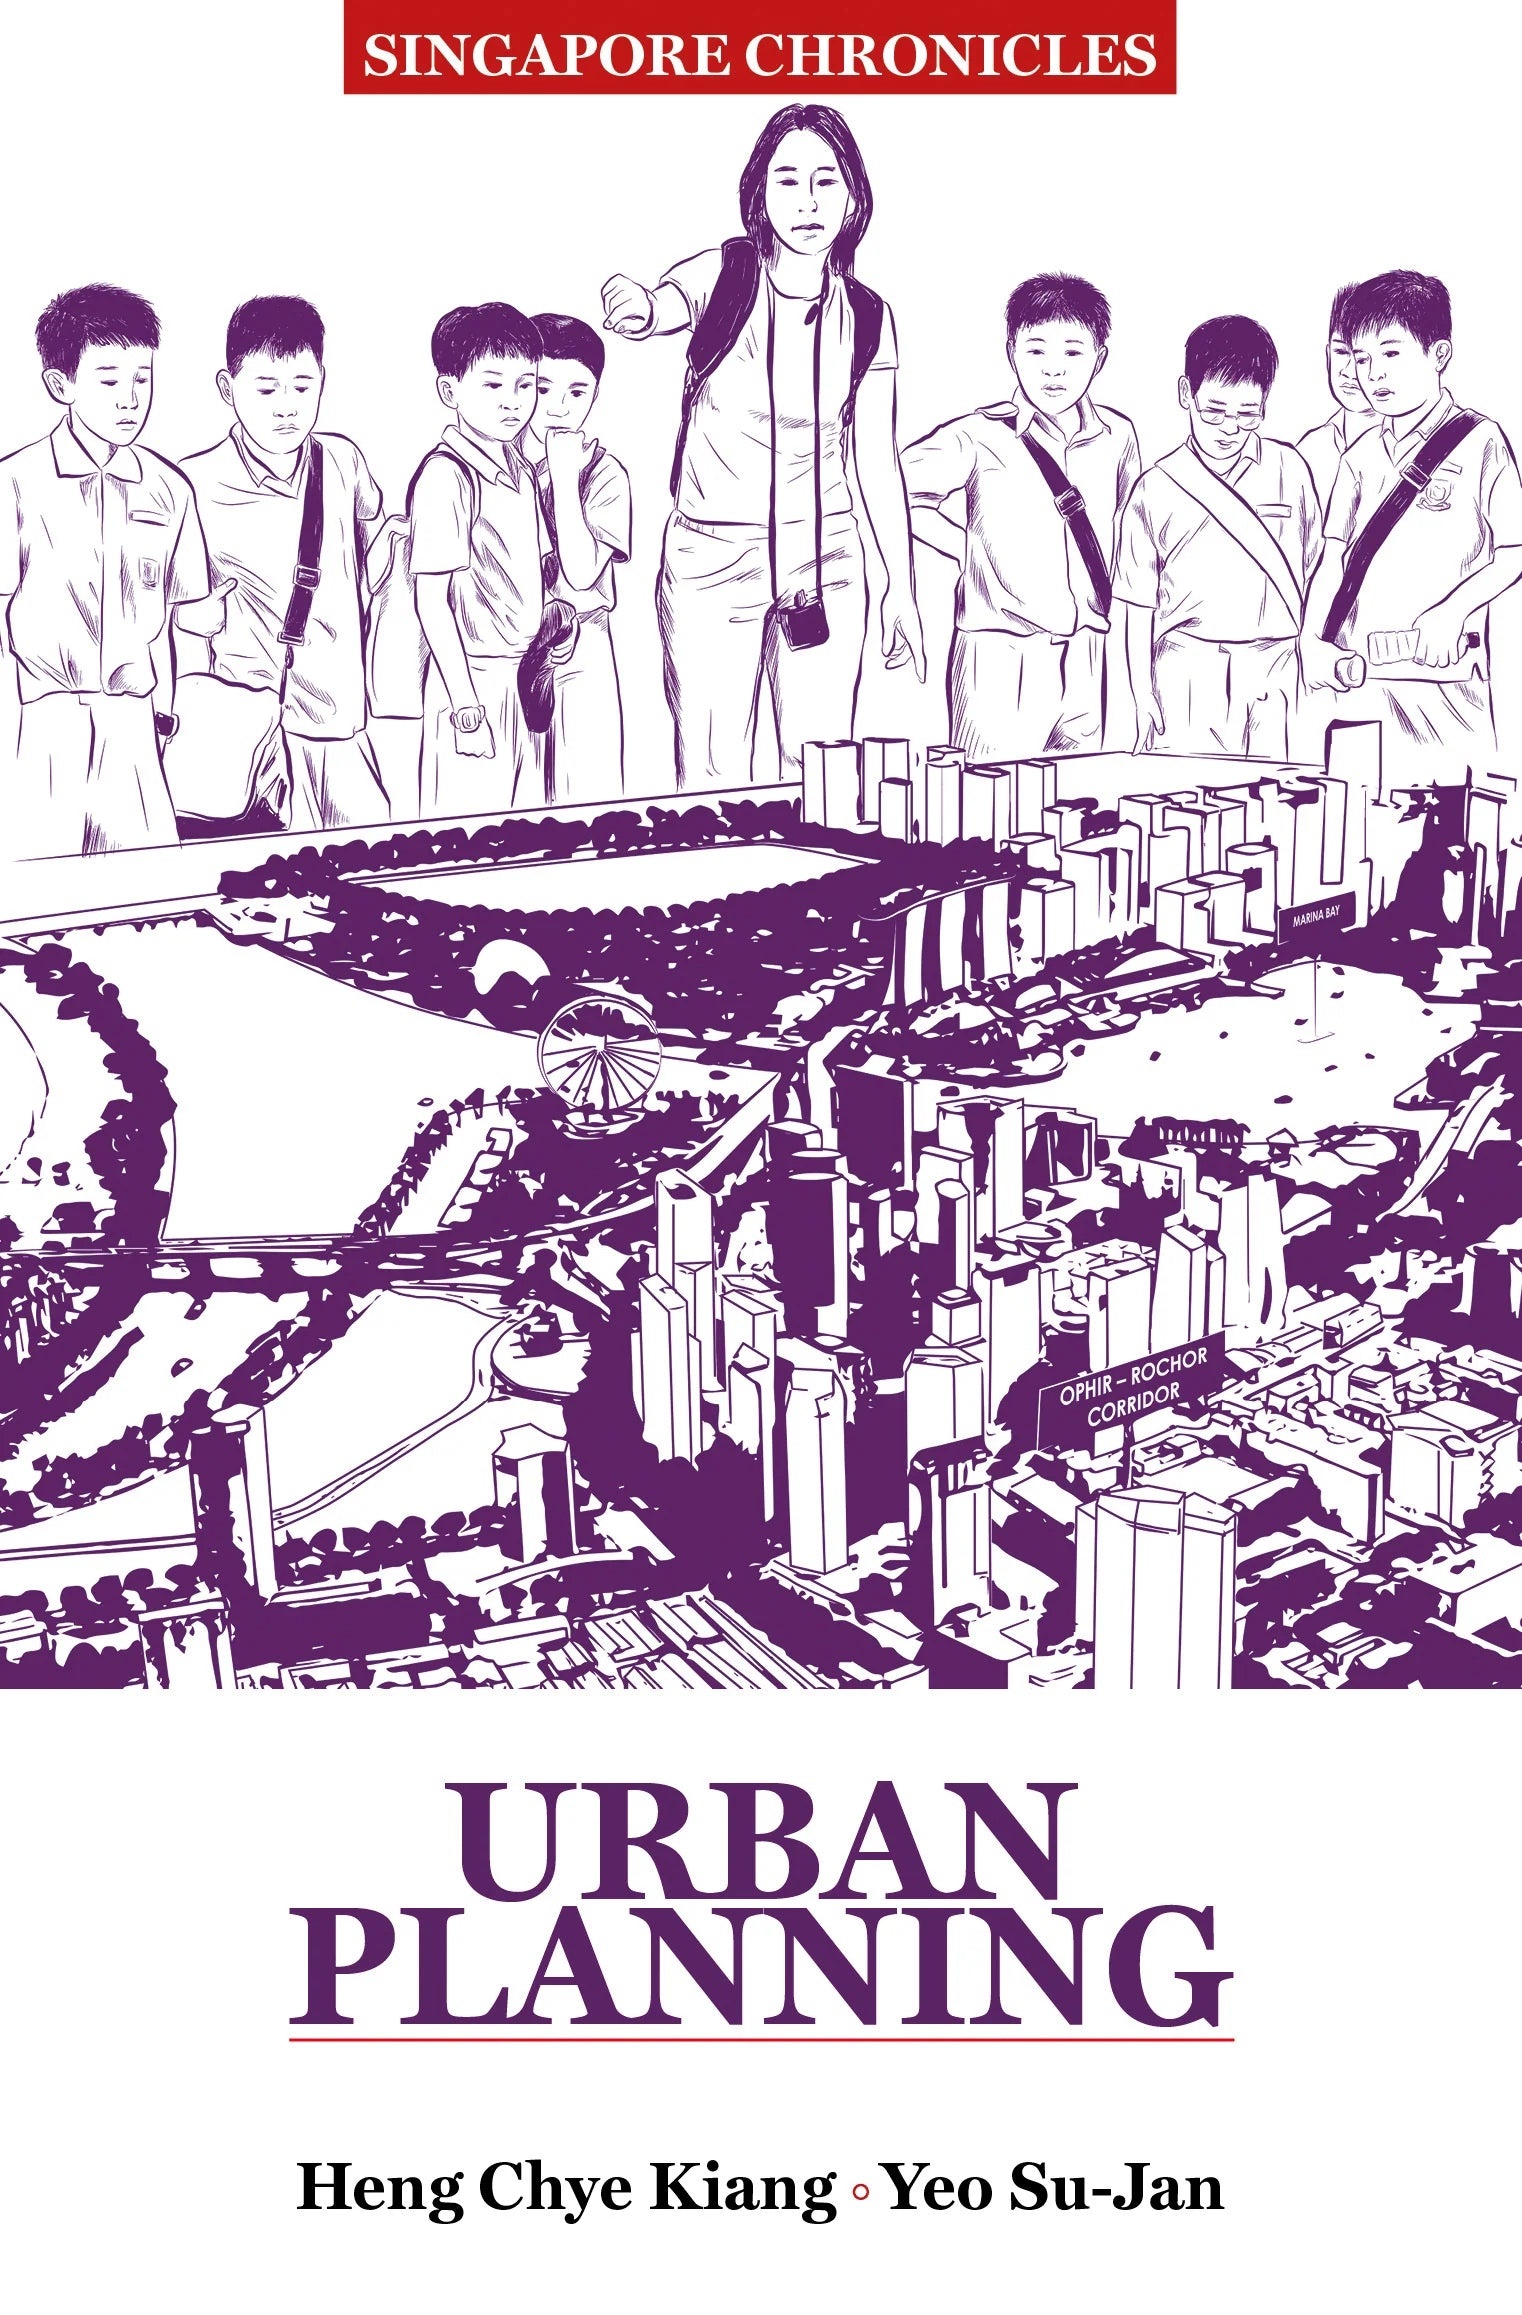 Singapore Chronicles: Urban Planning